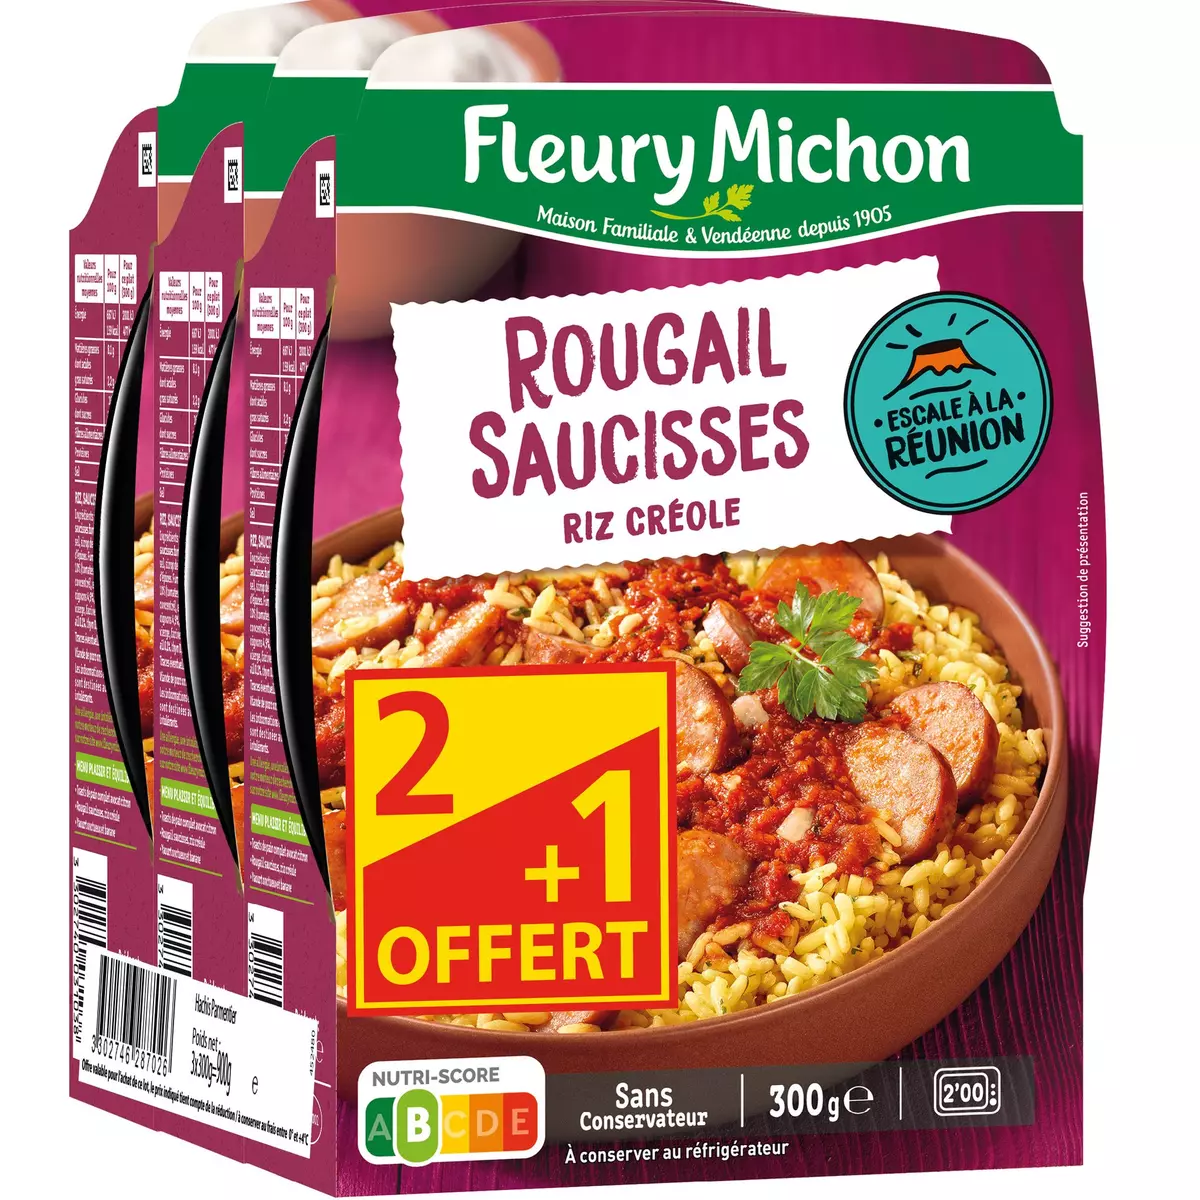 Auchan - Gingembre frais local 1kg